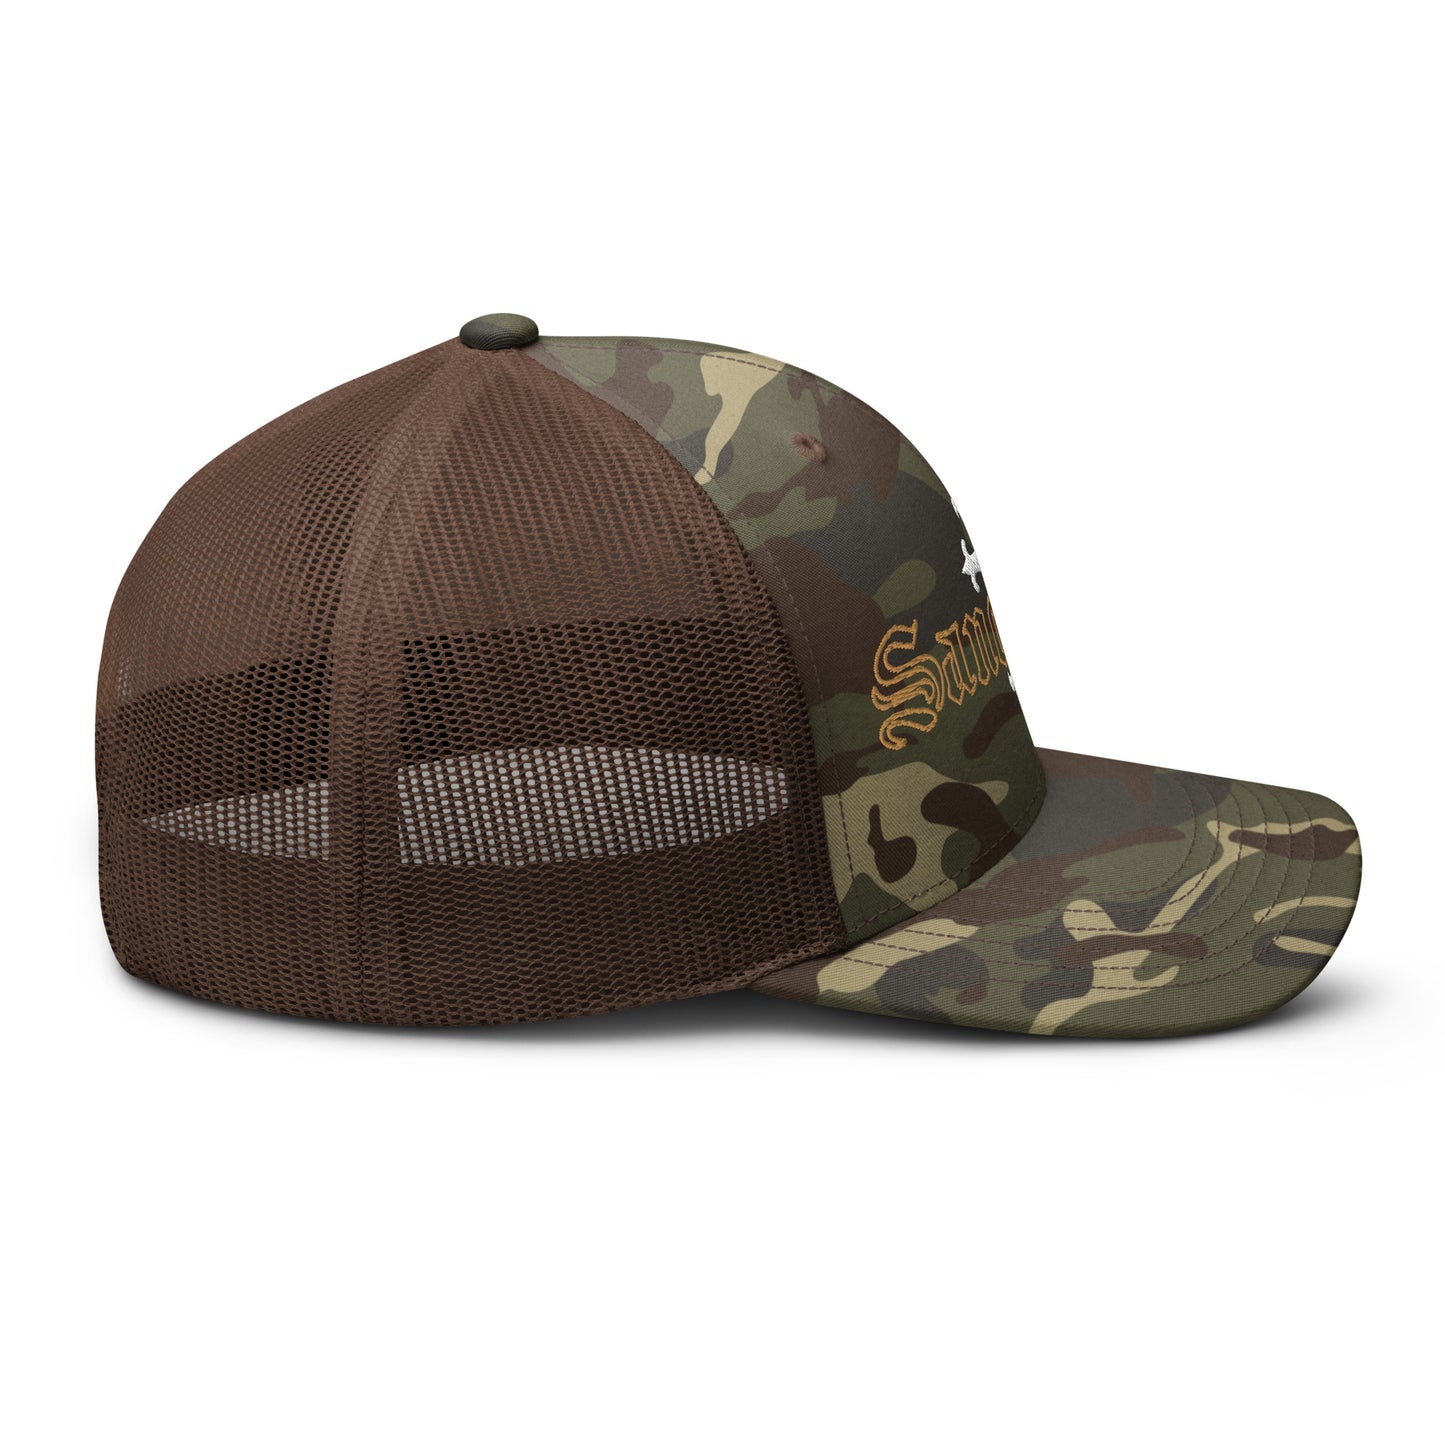 Sanctified- Camouflage trucker hat